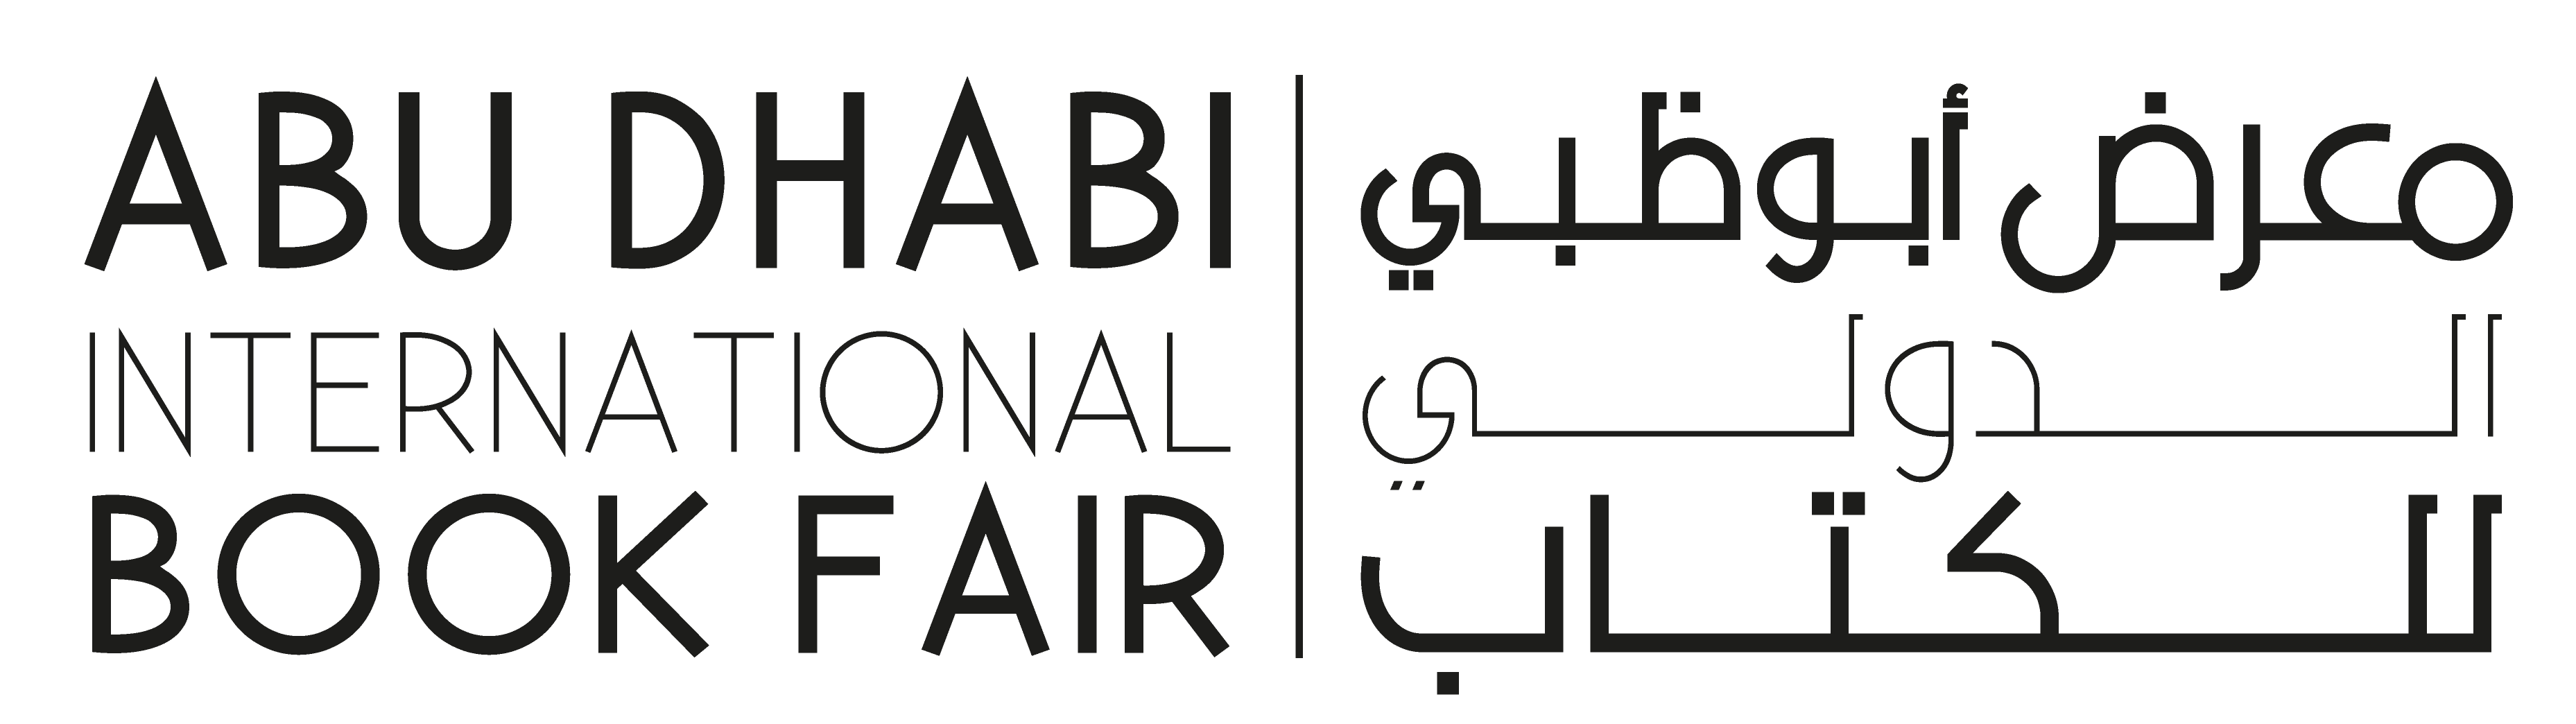 Logo Abu Dhabi International Book fair in english and arabic